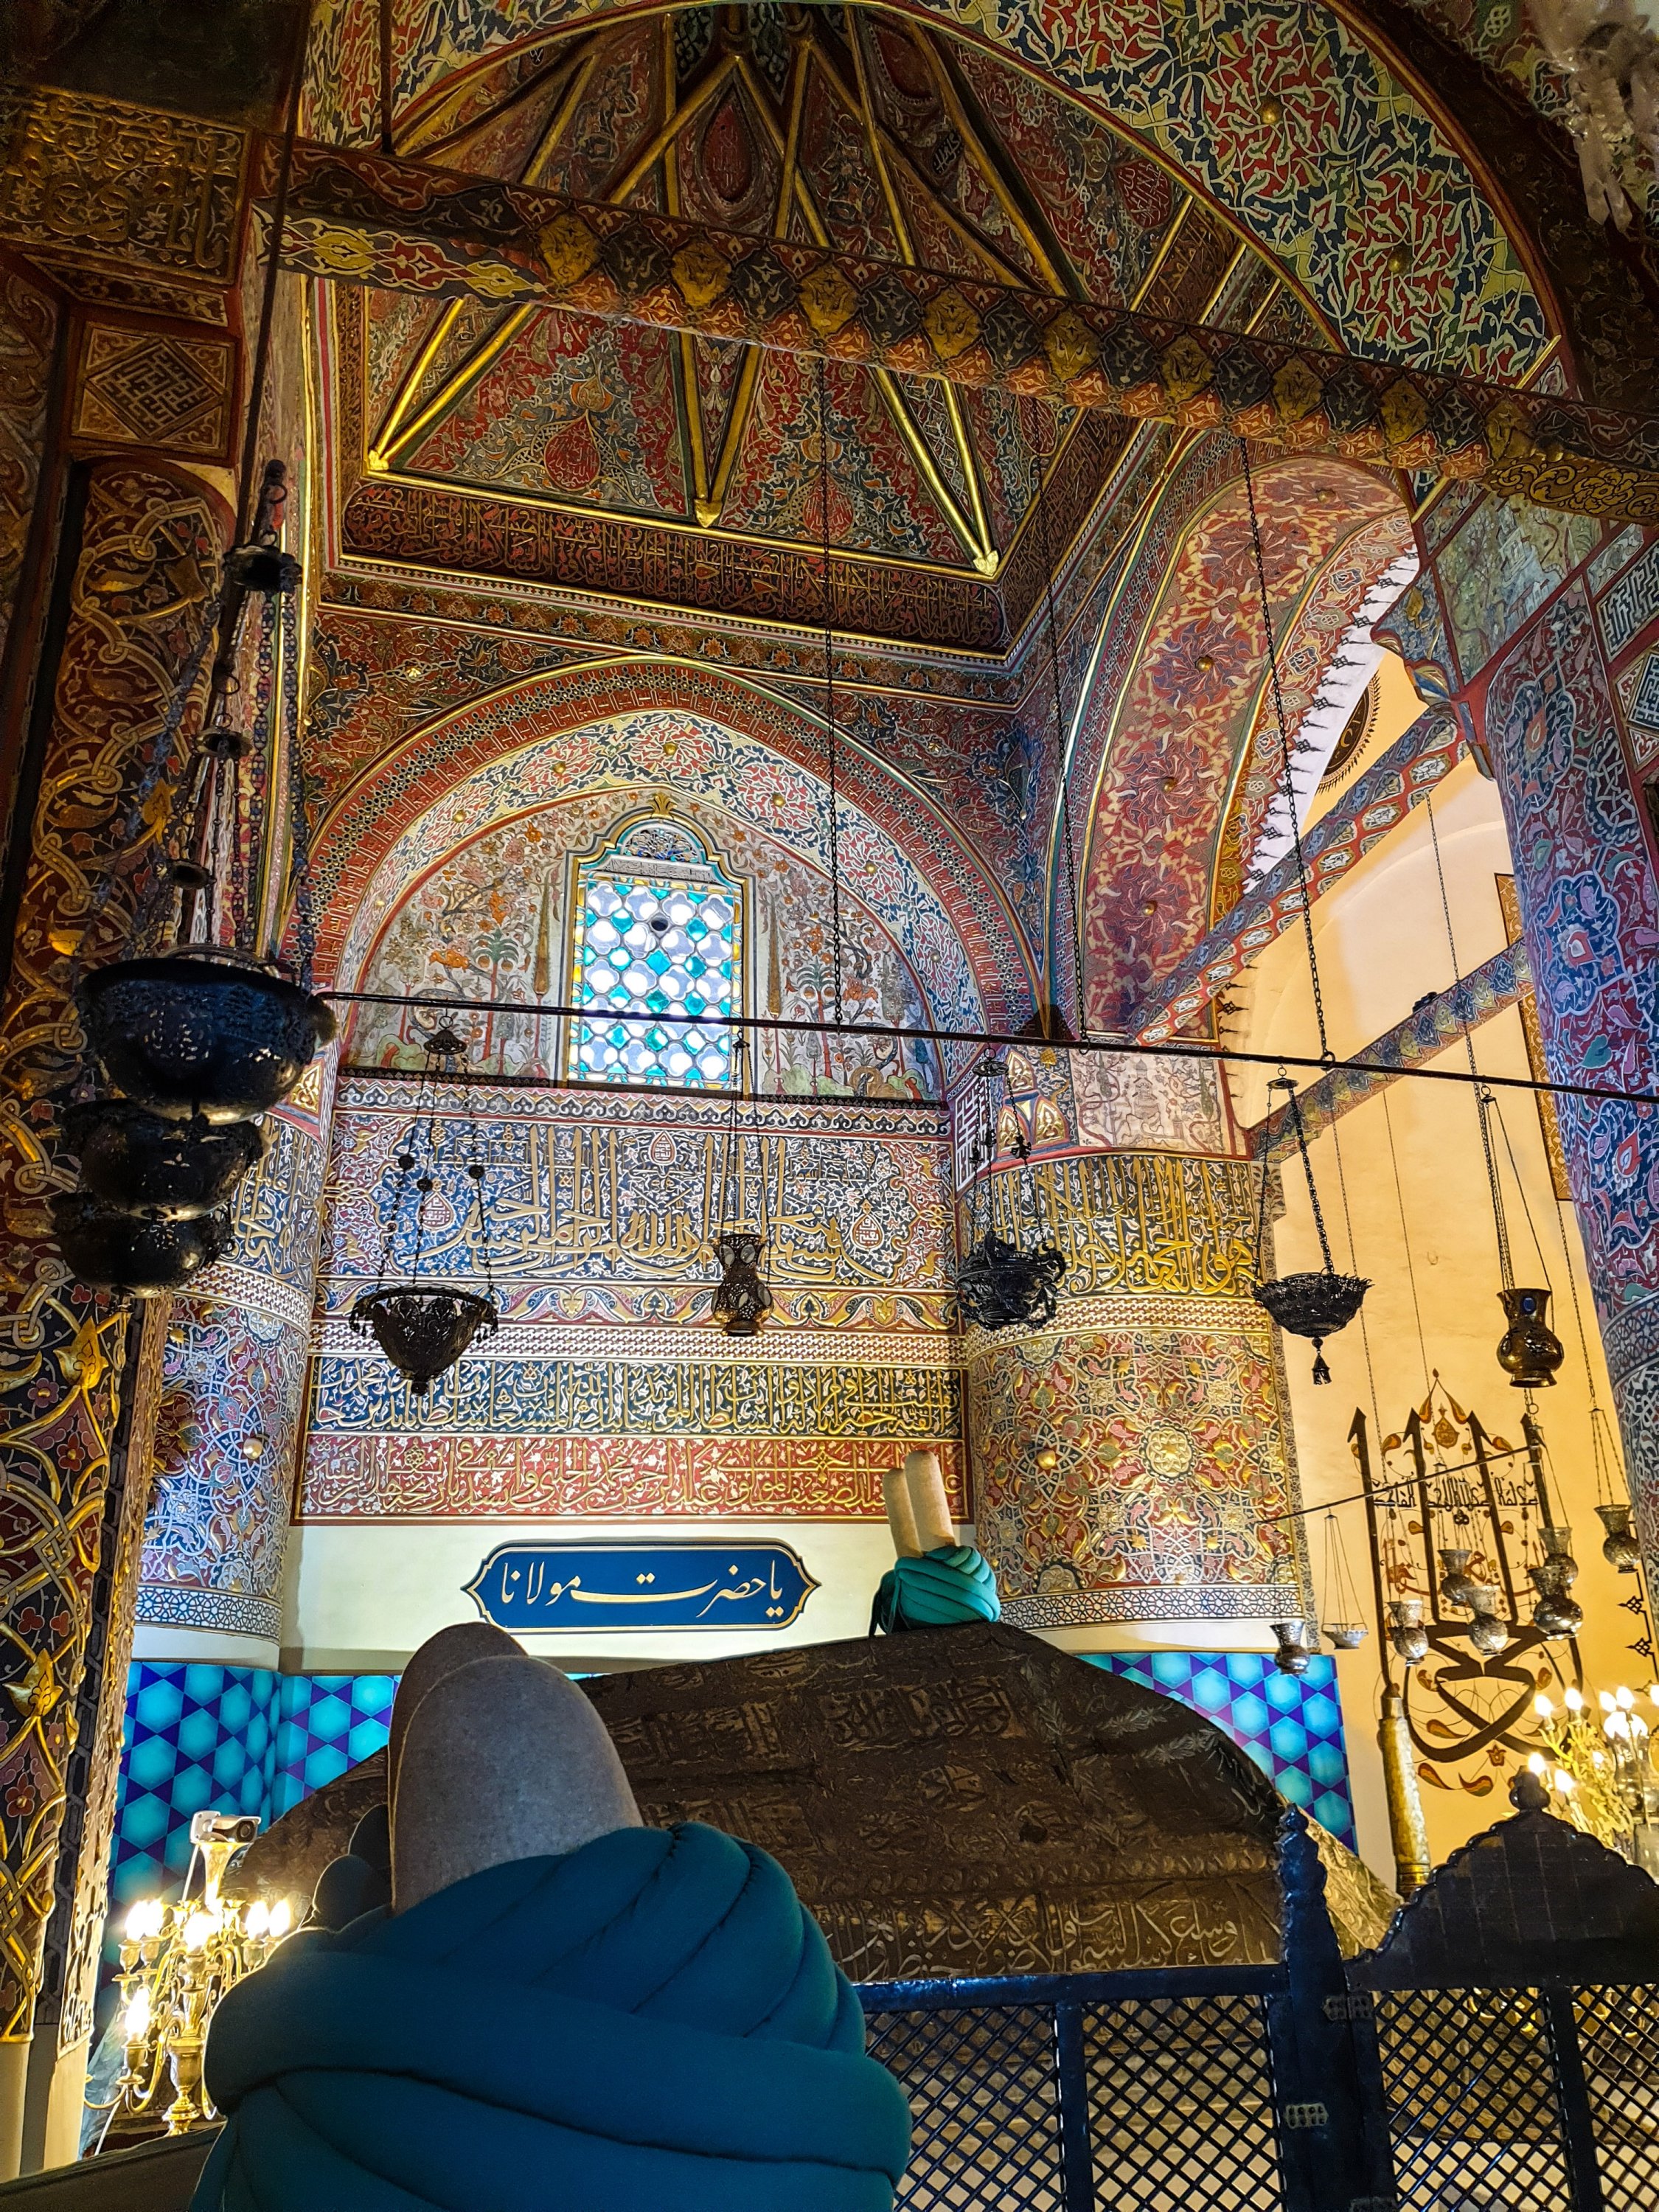 The inside of the tomb of Mevlana. (Photo by Argun Konuk)